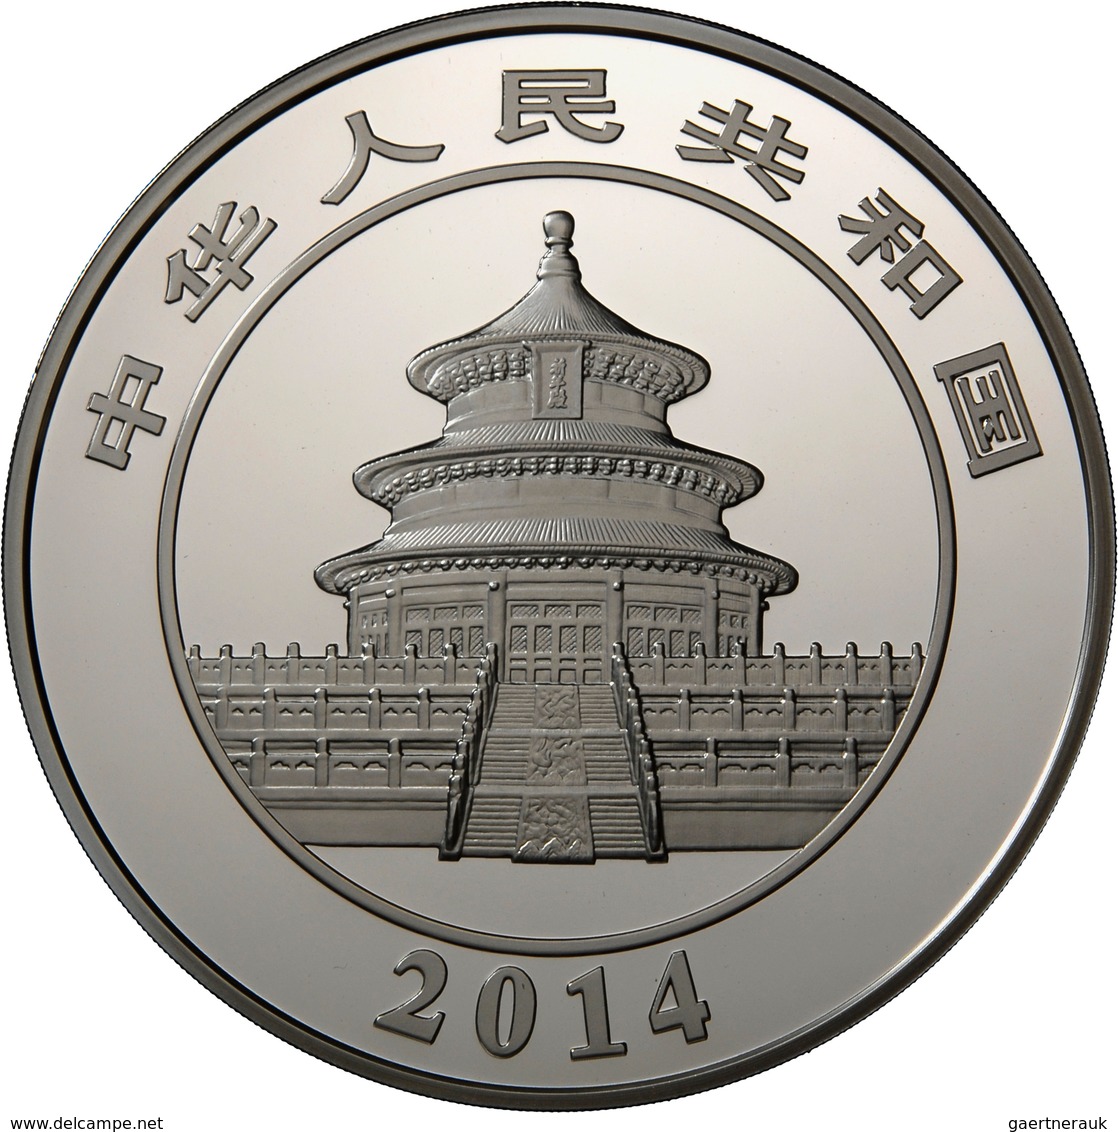 China - Volksrepublik: 300 Yuan 2014, Silber Panda, 1 Kg 999/1000 Silber. Inklusive Zertifikat, Etui - China